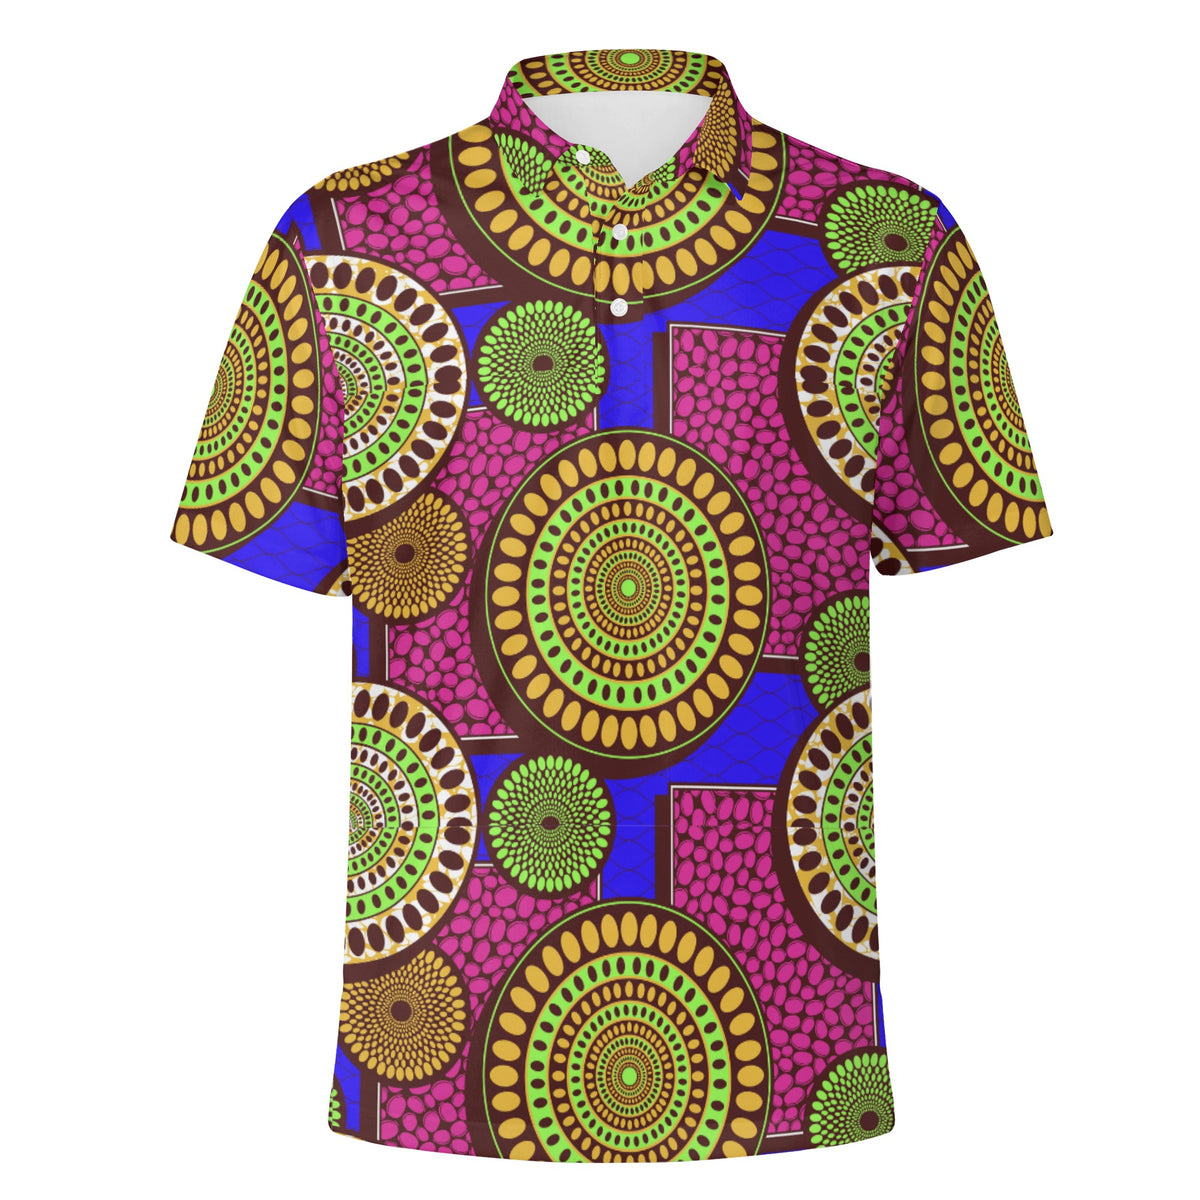 Dark Khaki Polo Shirt with African Ankara prints in vibrant colors Sumbu_African_Prints_and_Designs